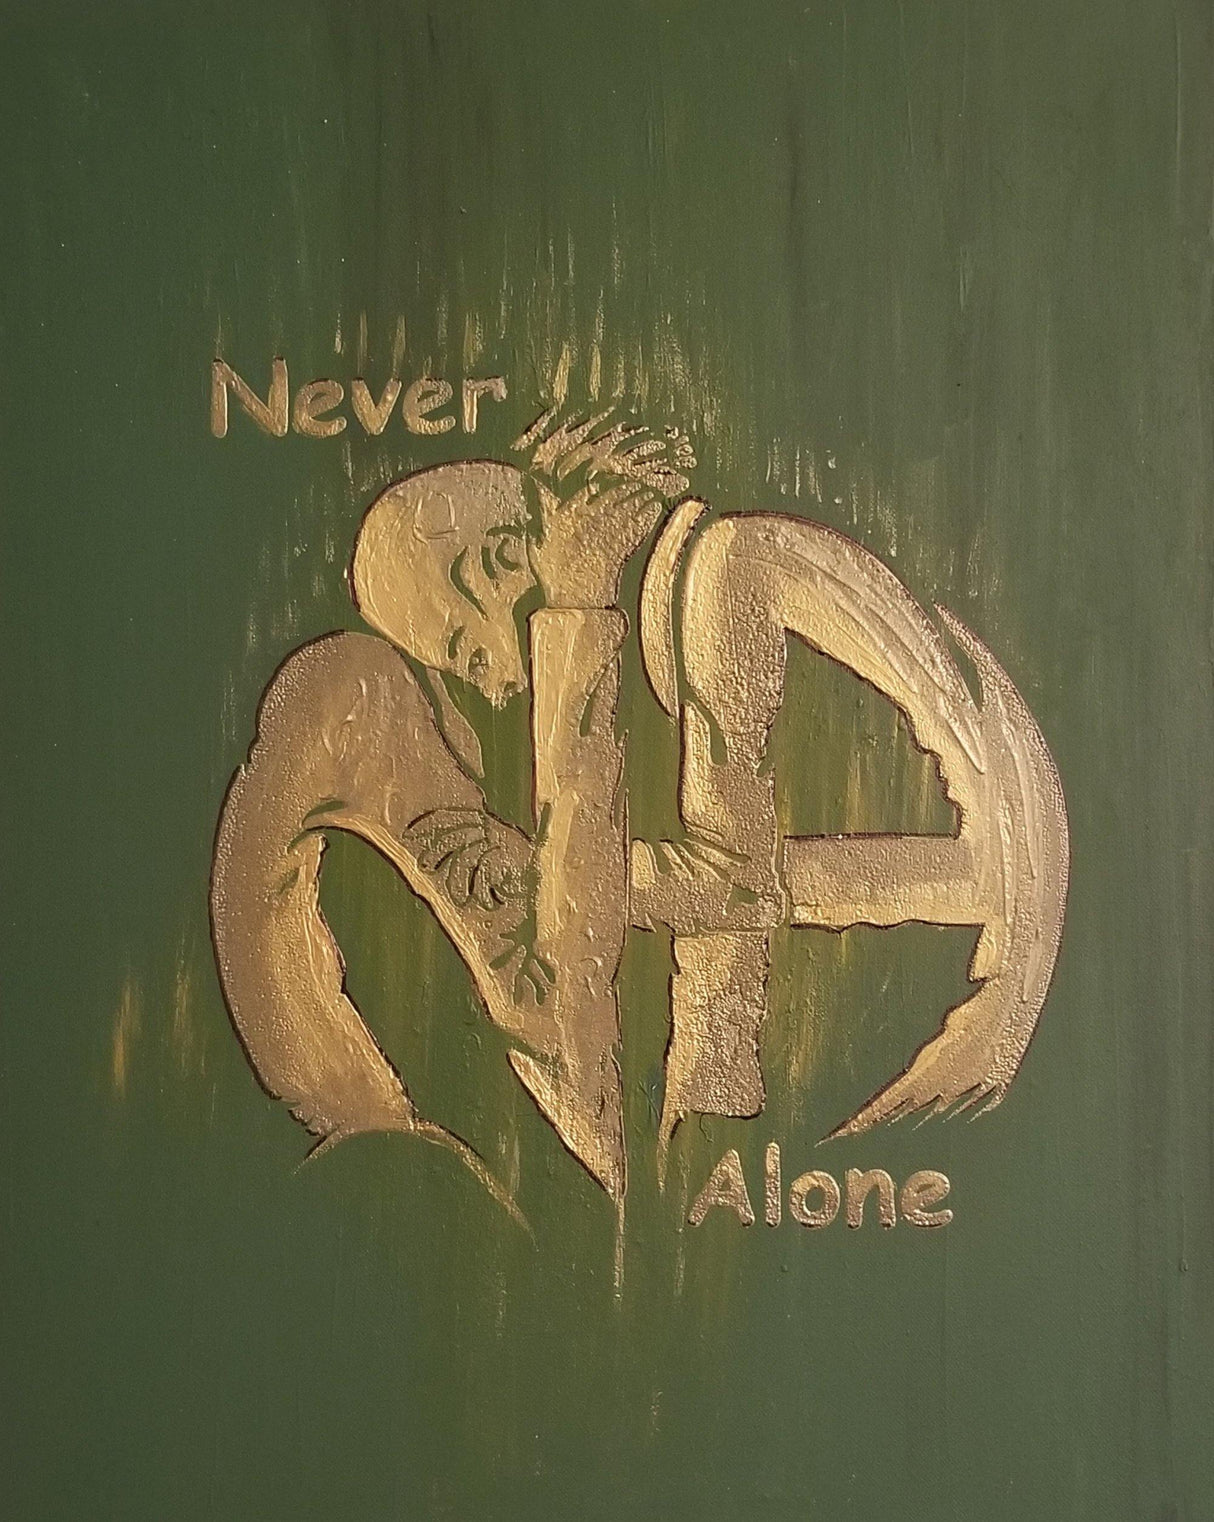 NA-ART - Canvas NA HUGS In GREEN and Gold - nawears